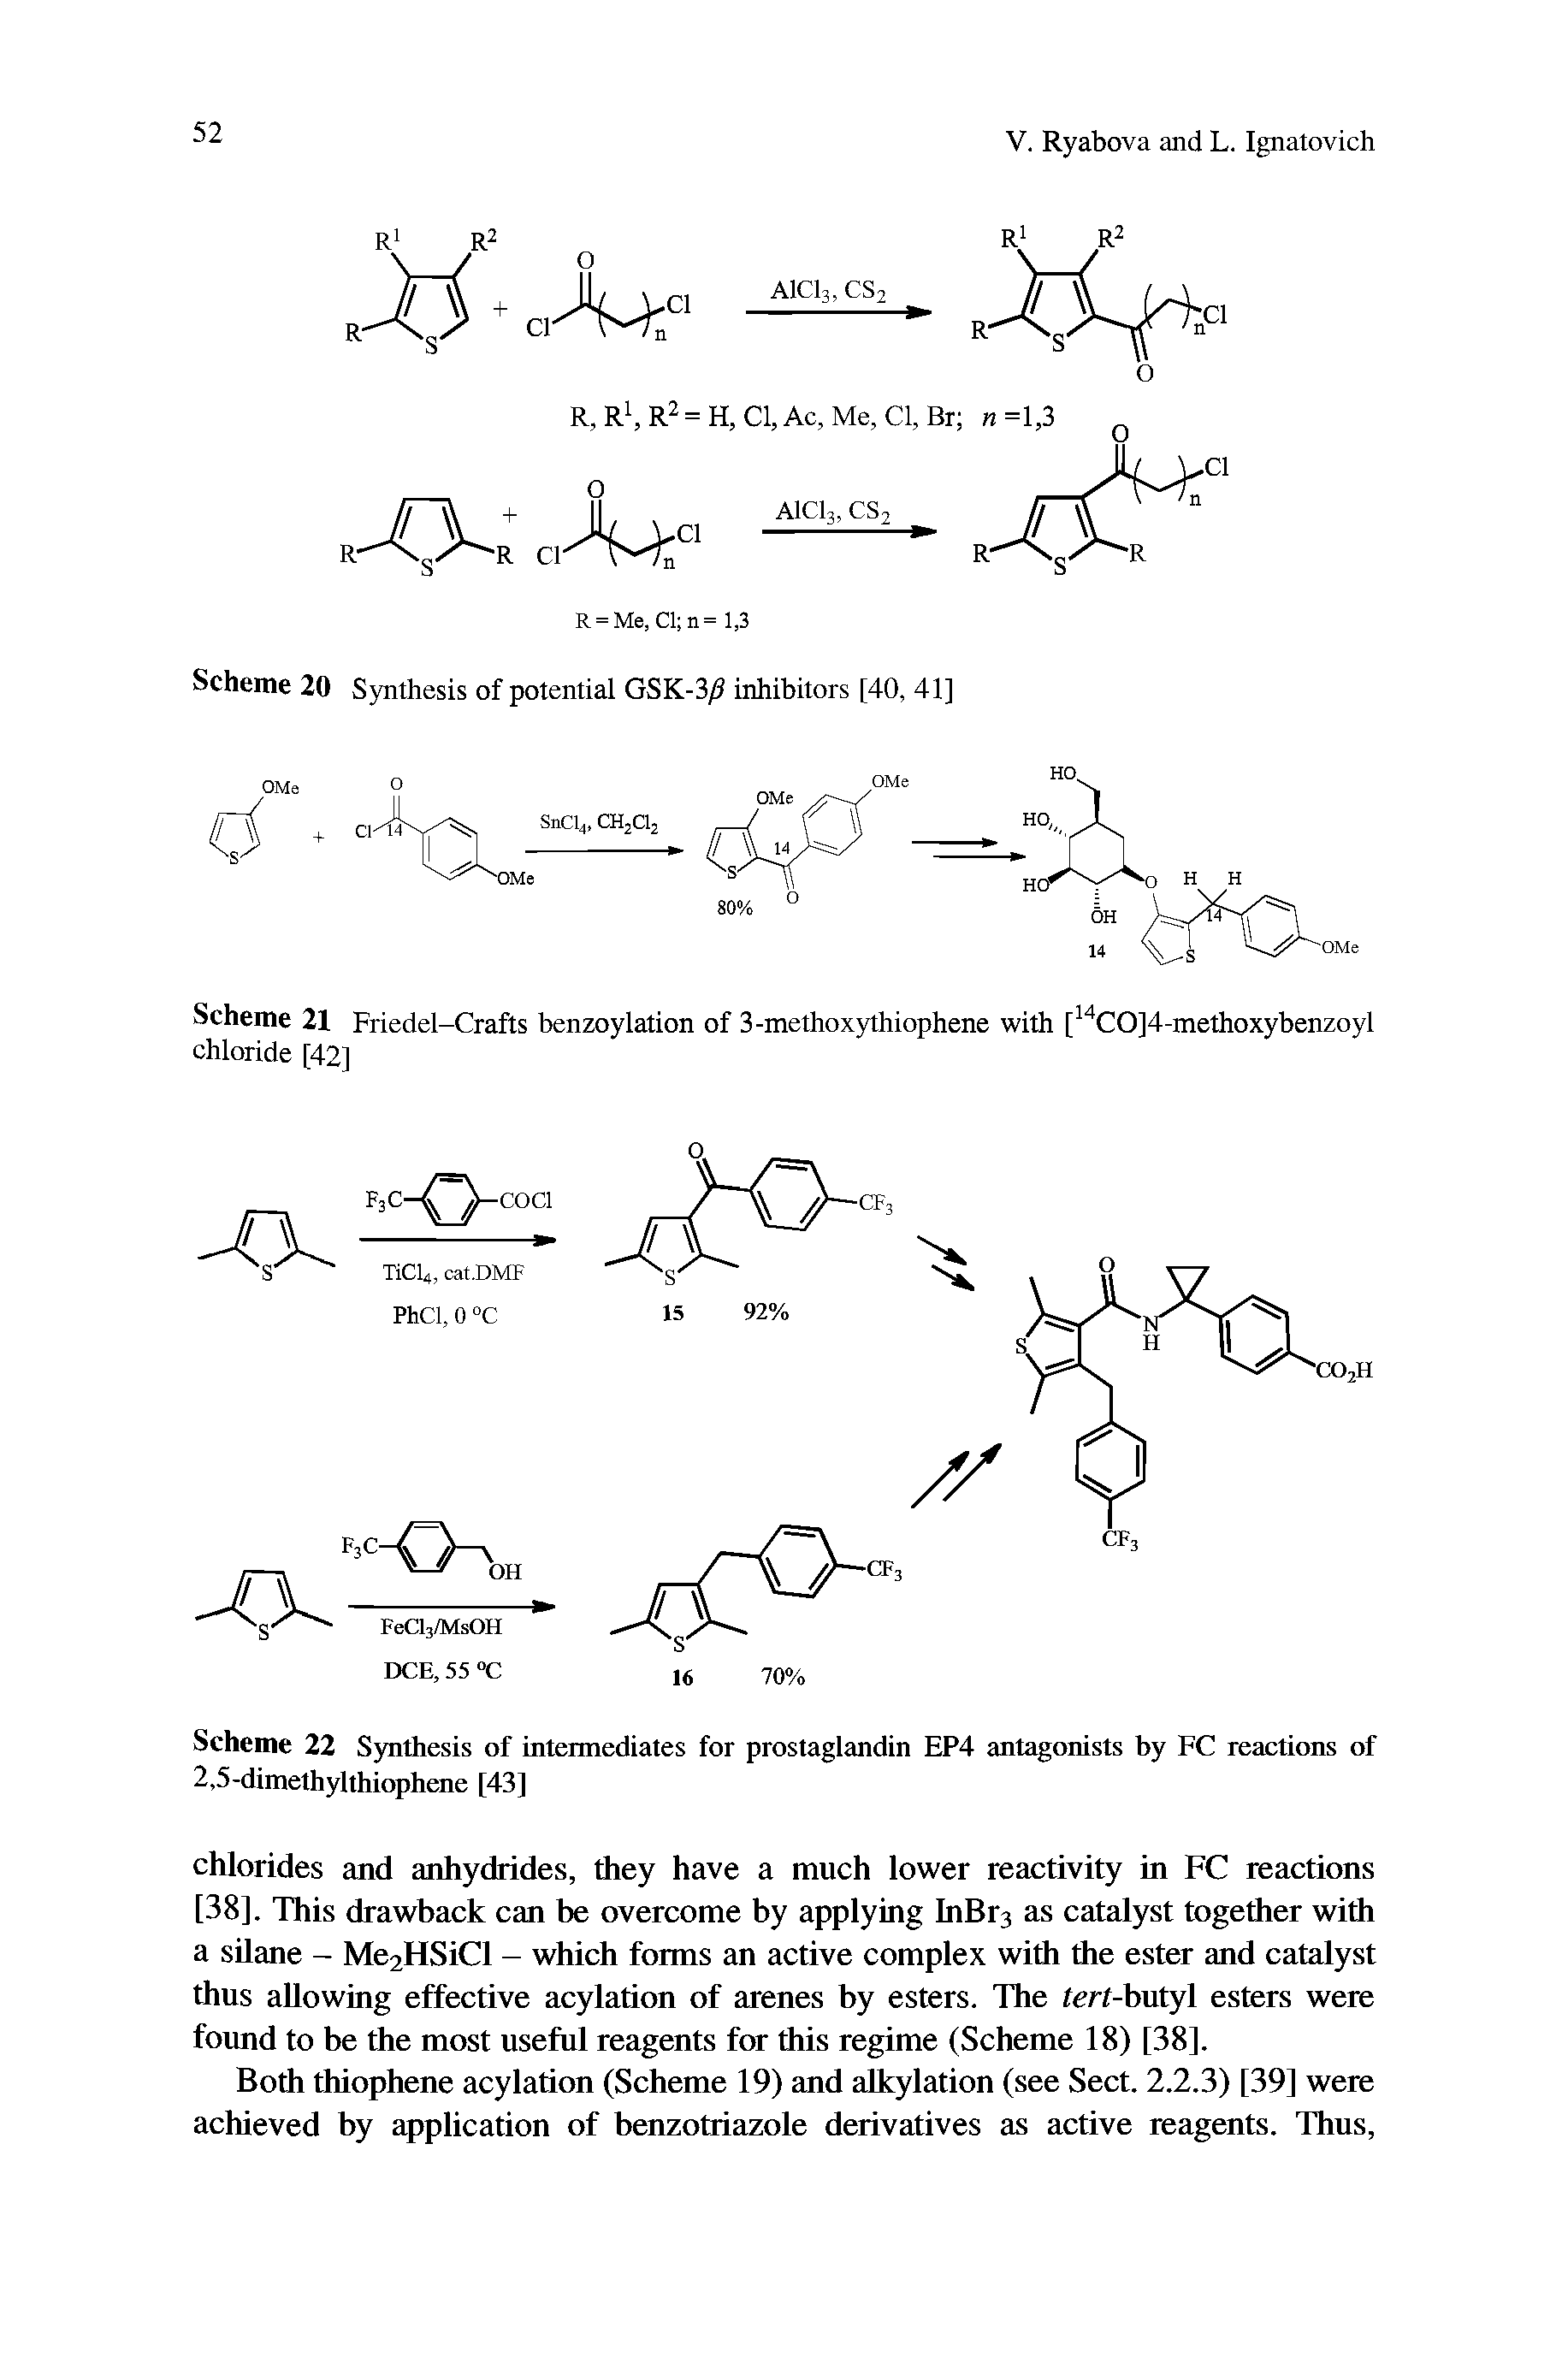 Scheme 21 Friedel-Crafts benzoylation of 3-methoxythlophene with [ CO]4-methoxybenzoyl chloride [42]...